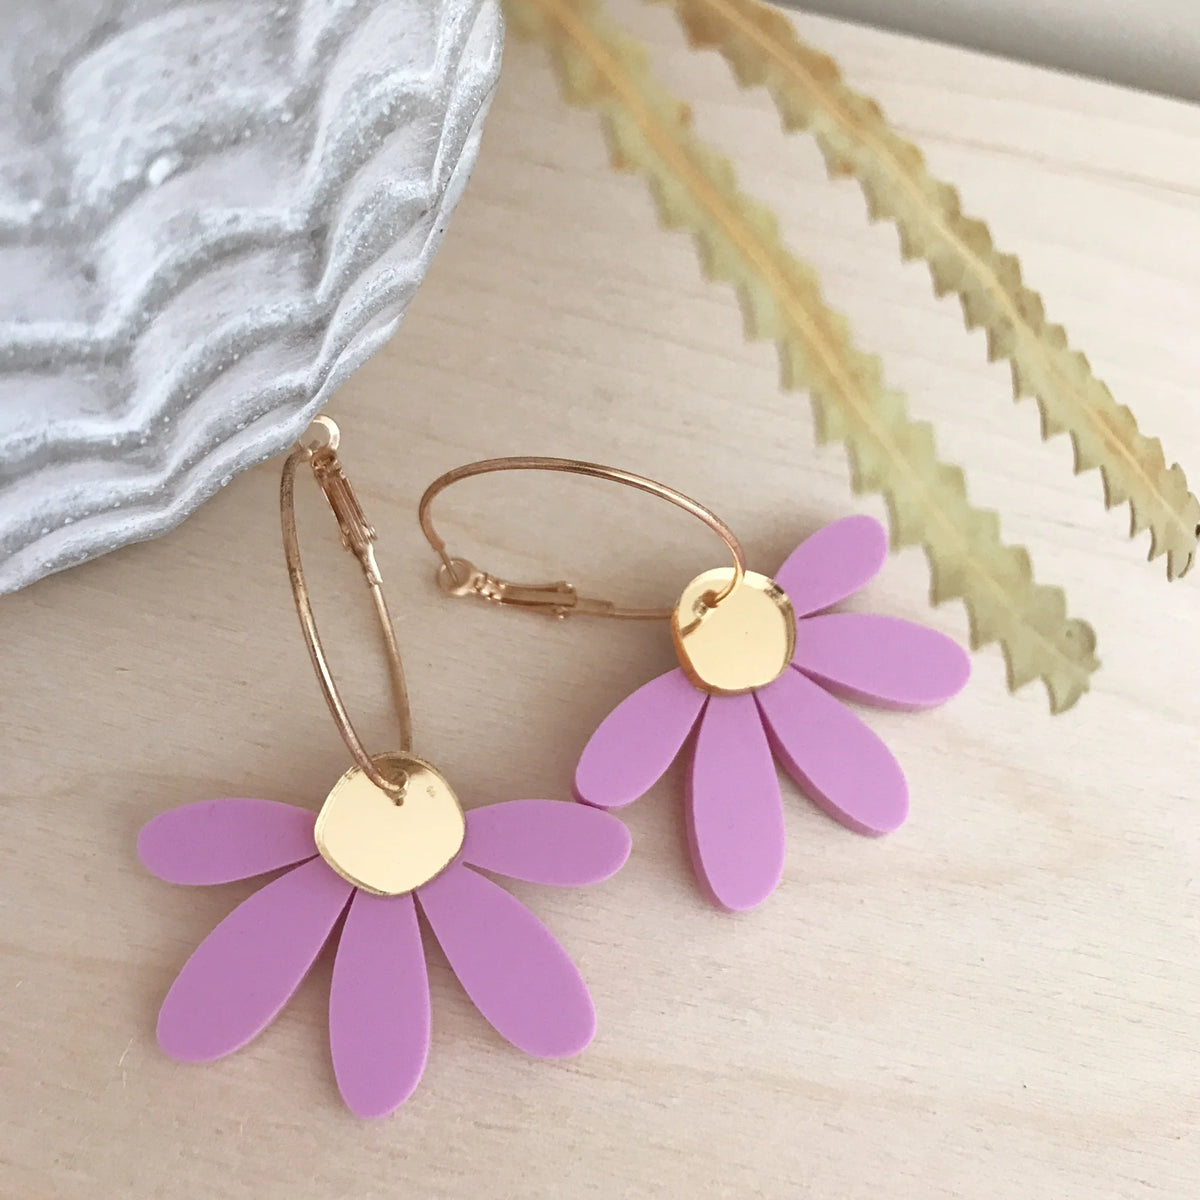 Jumbo Daisy Hoops Earrings | Lilac And Gold Mirror